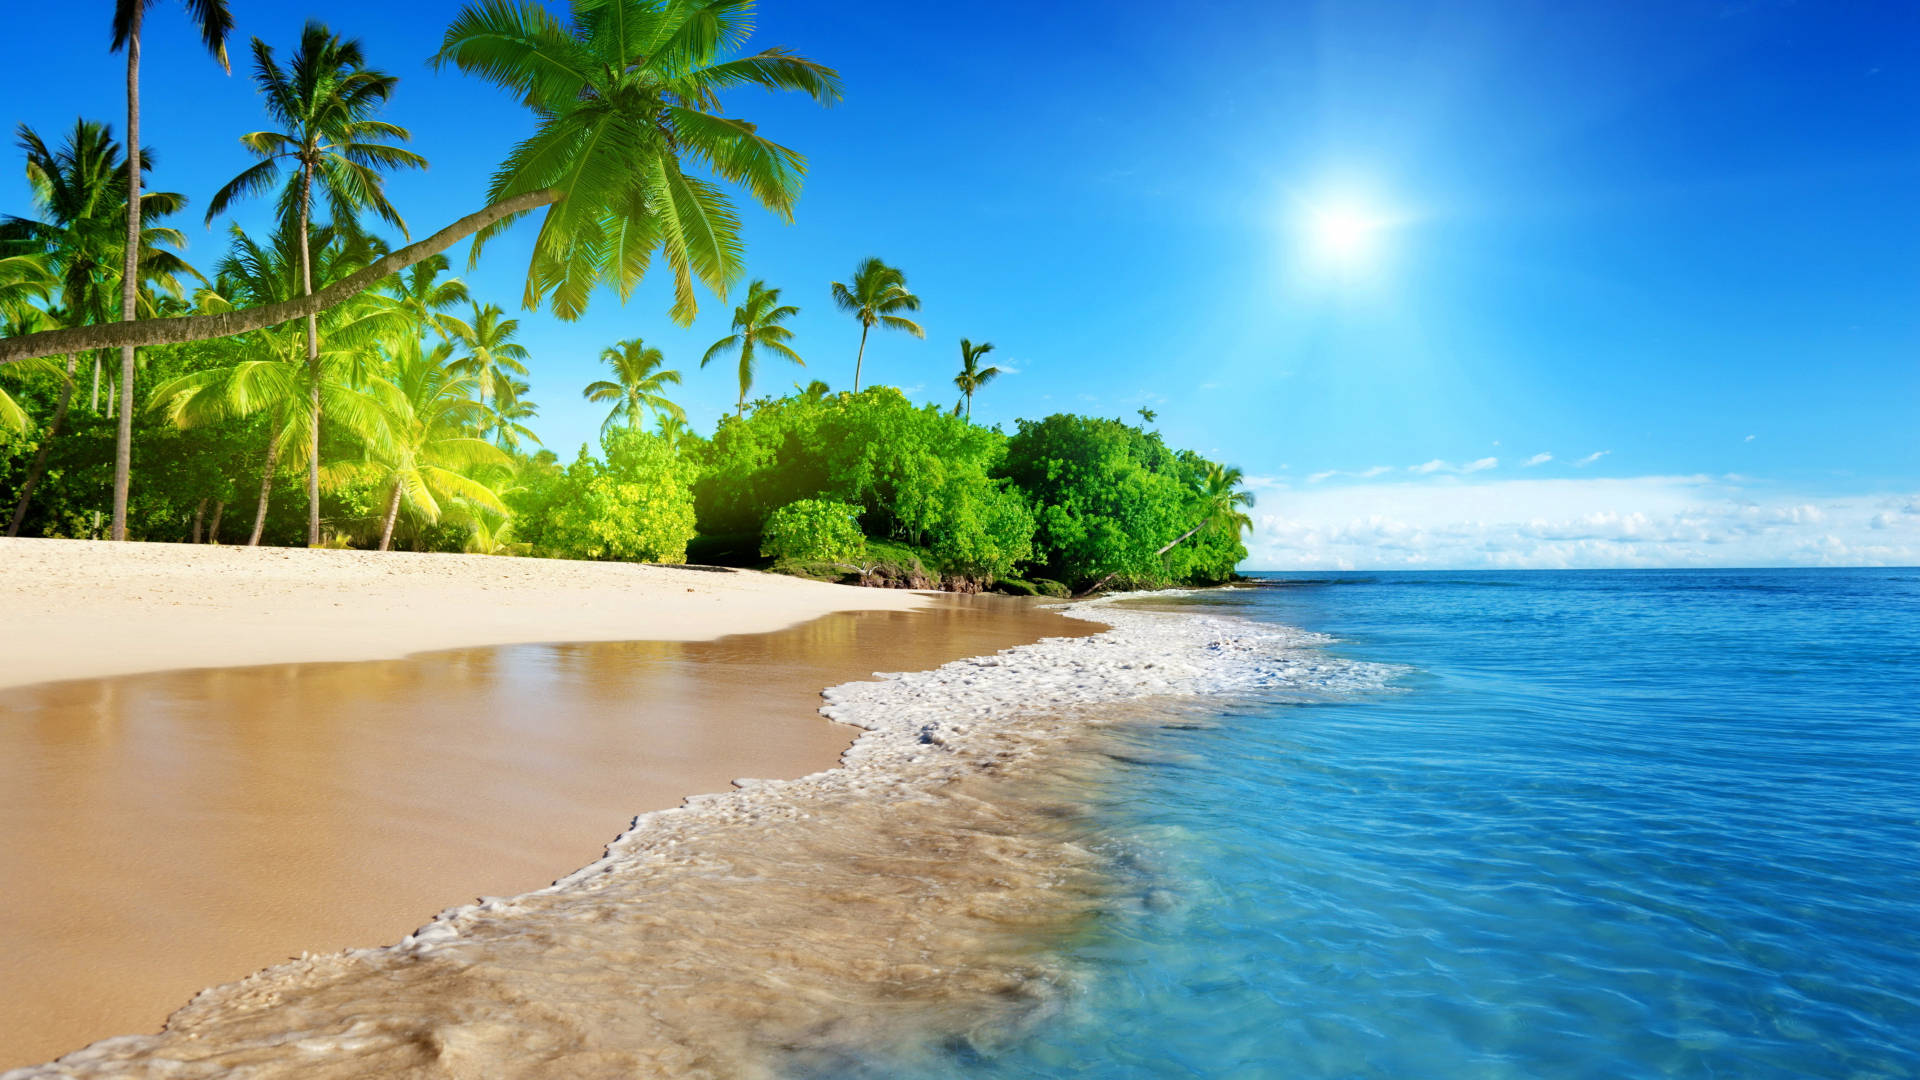 Tropical Island Season Background